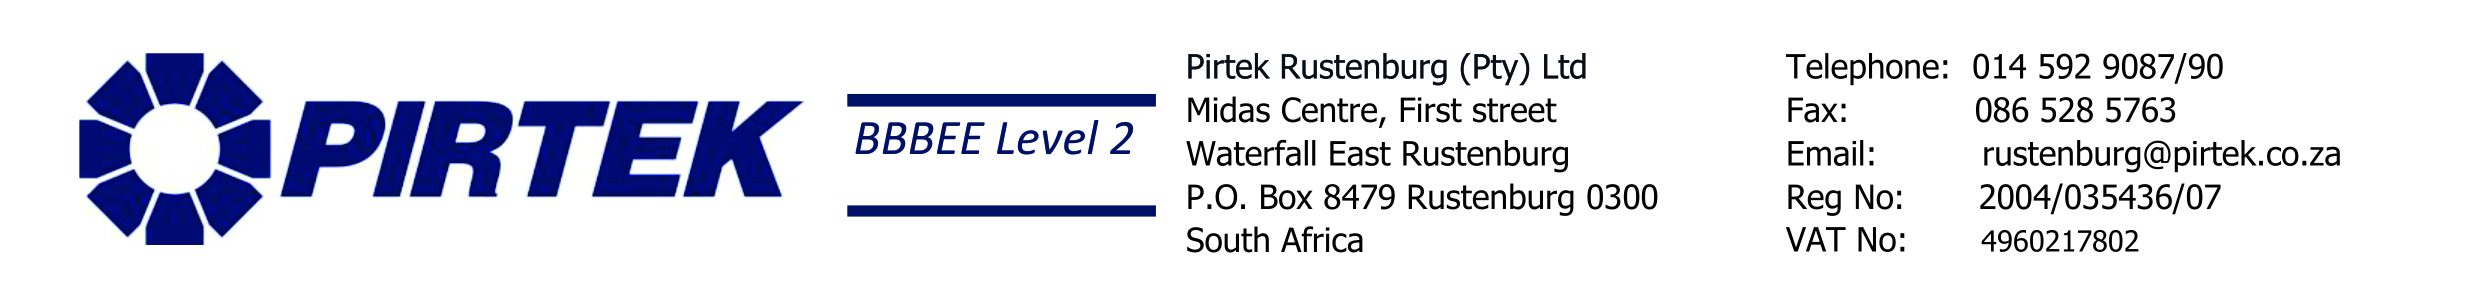 Pirtek Rustenburg (Pty) Ltd logo